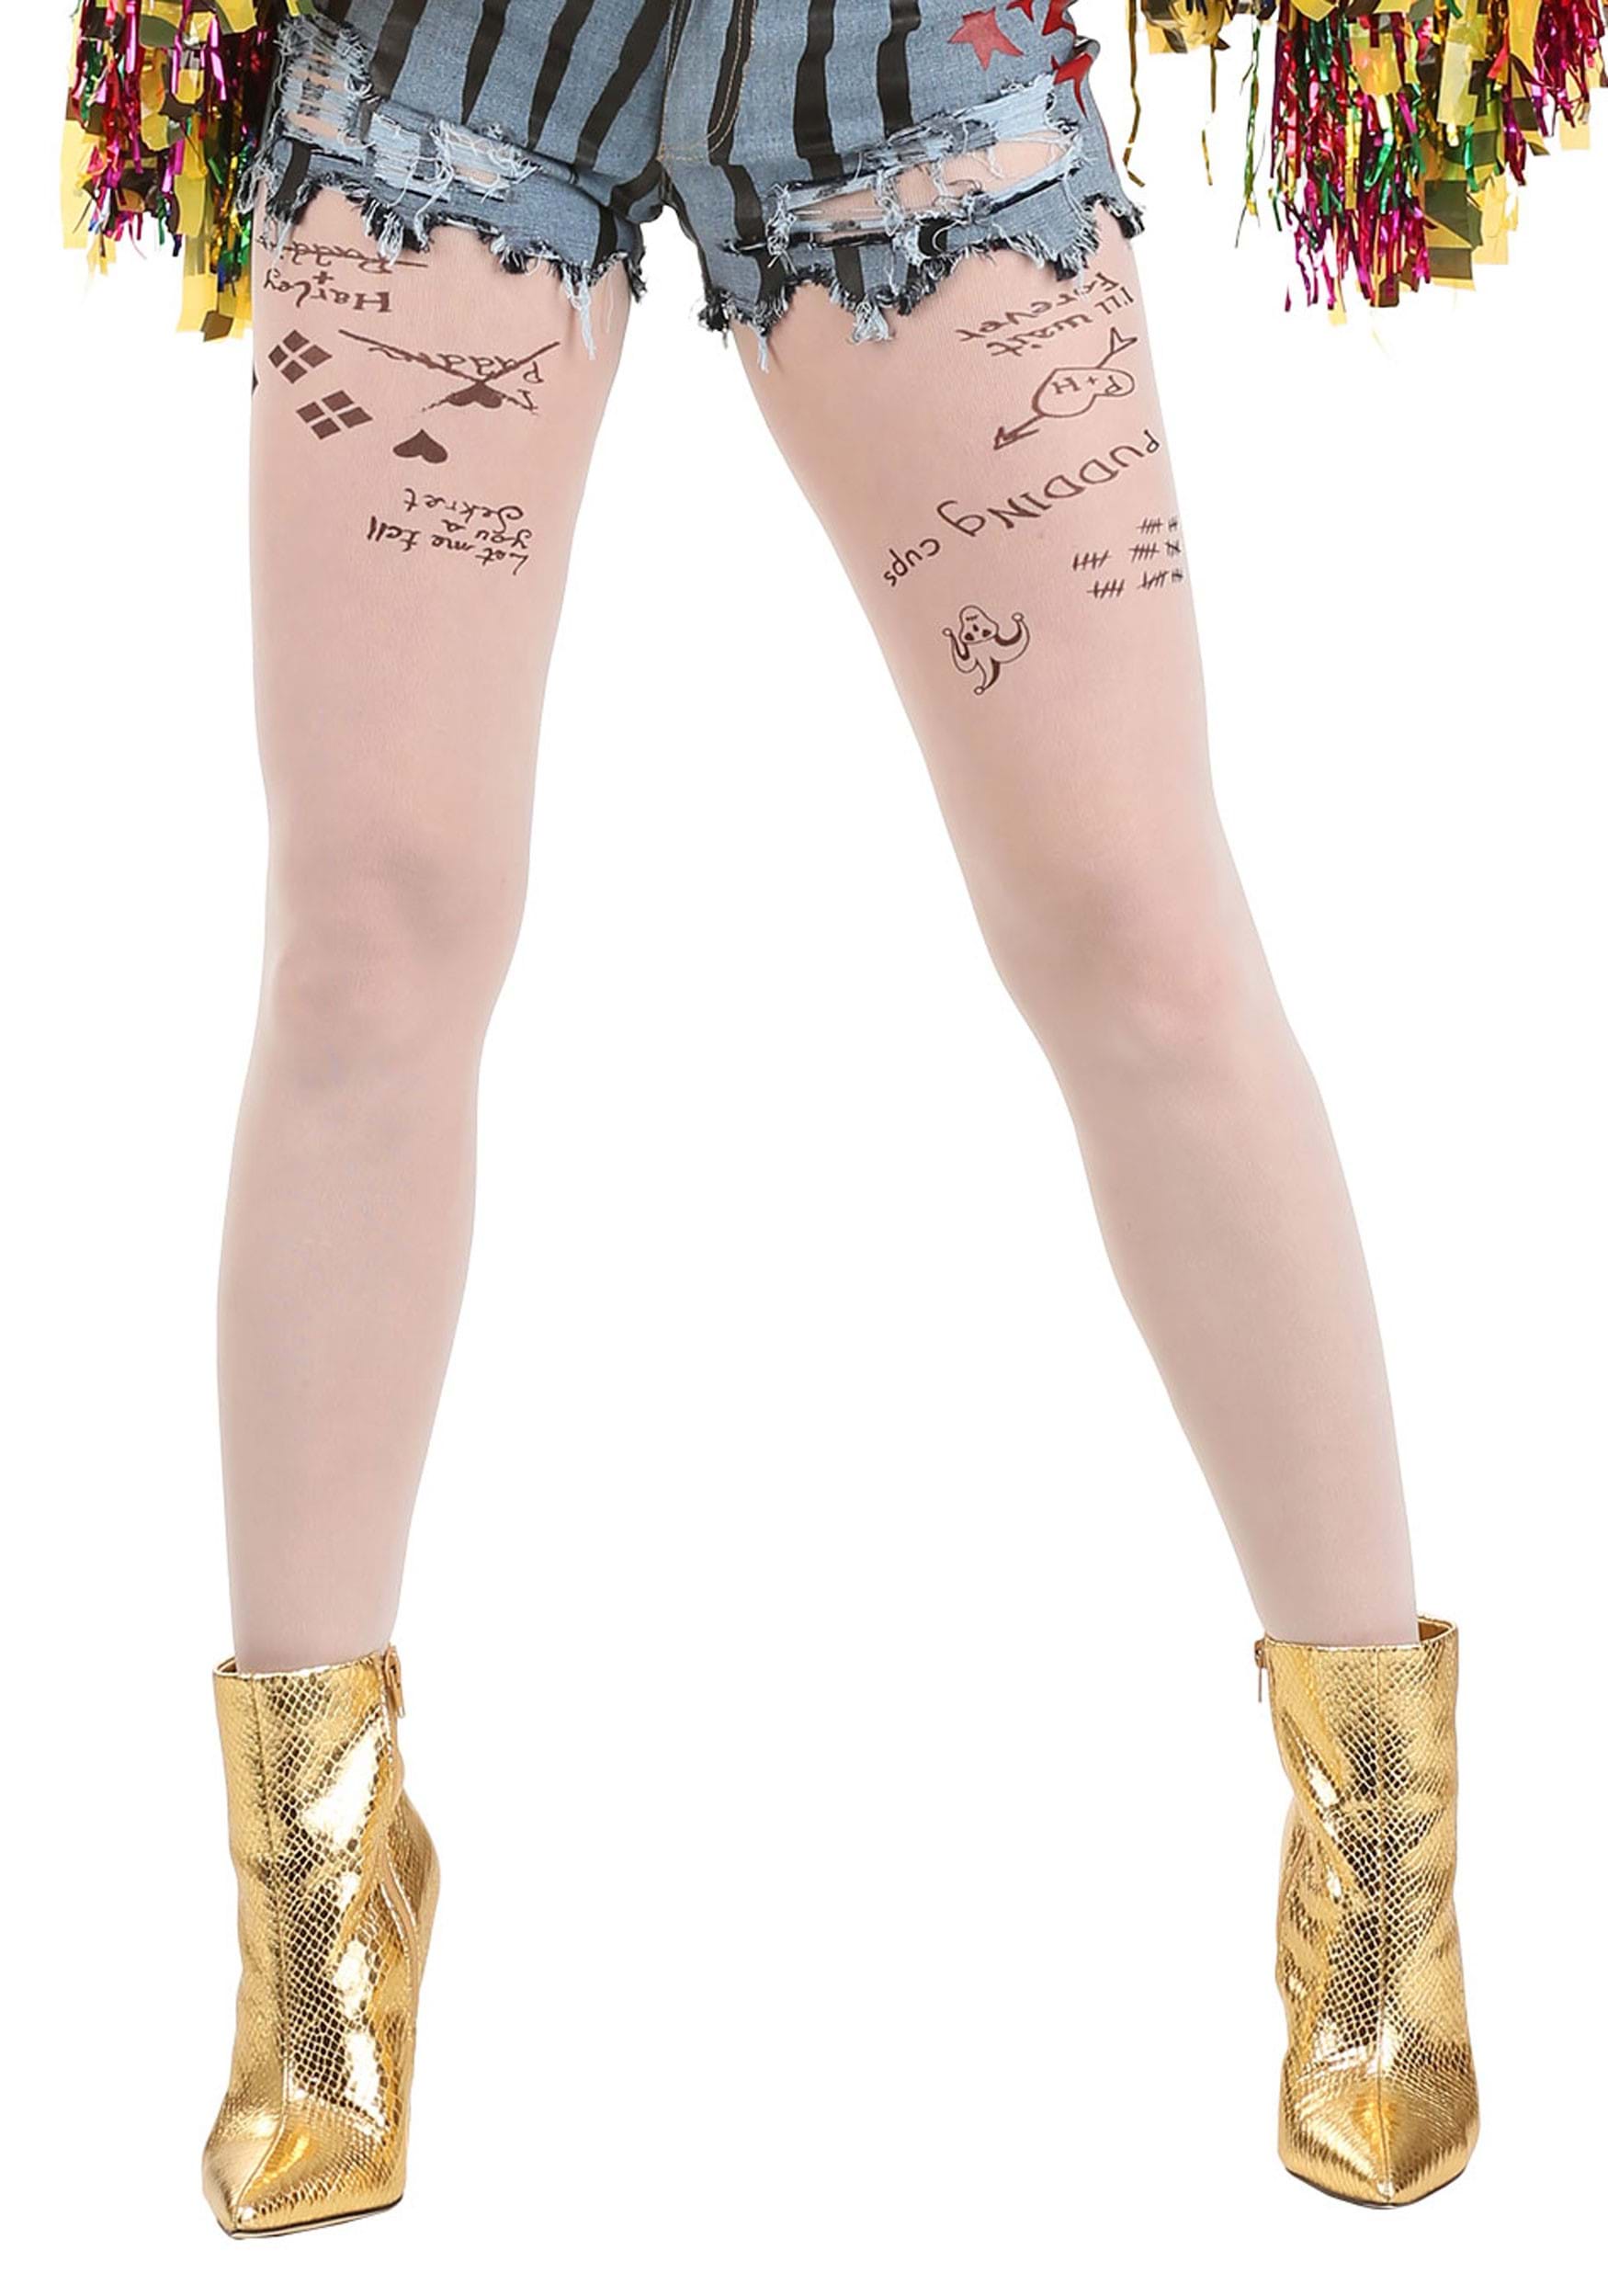 Harley quinn tattoo tights